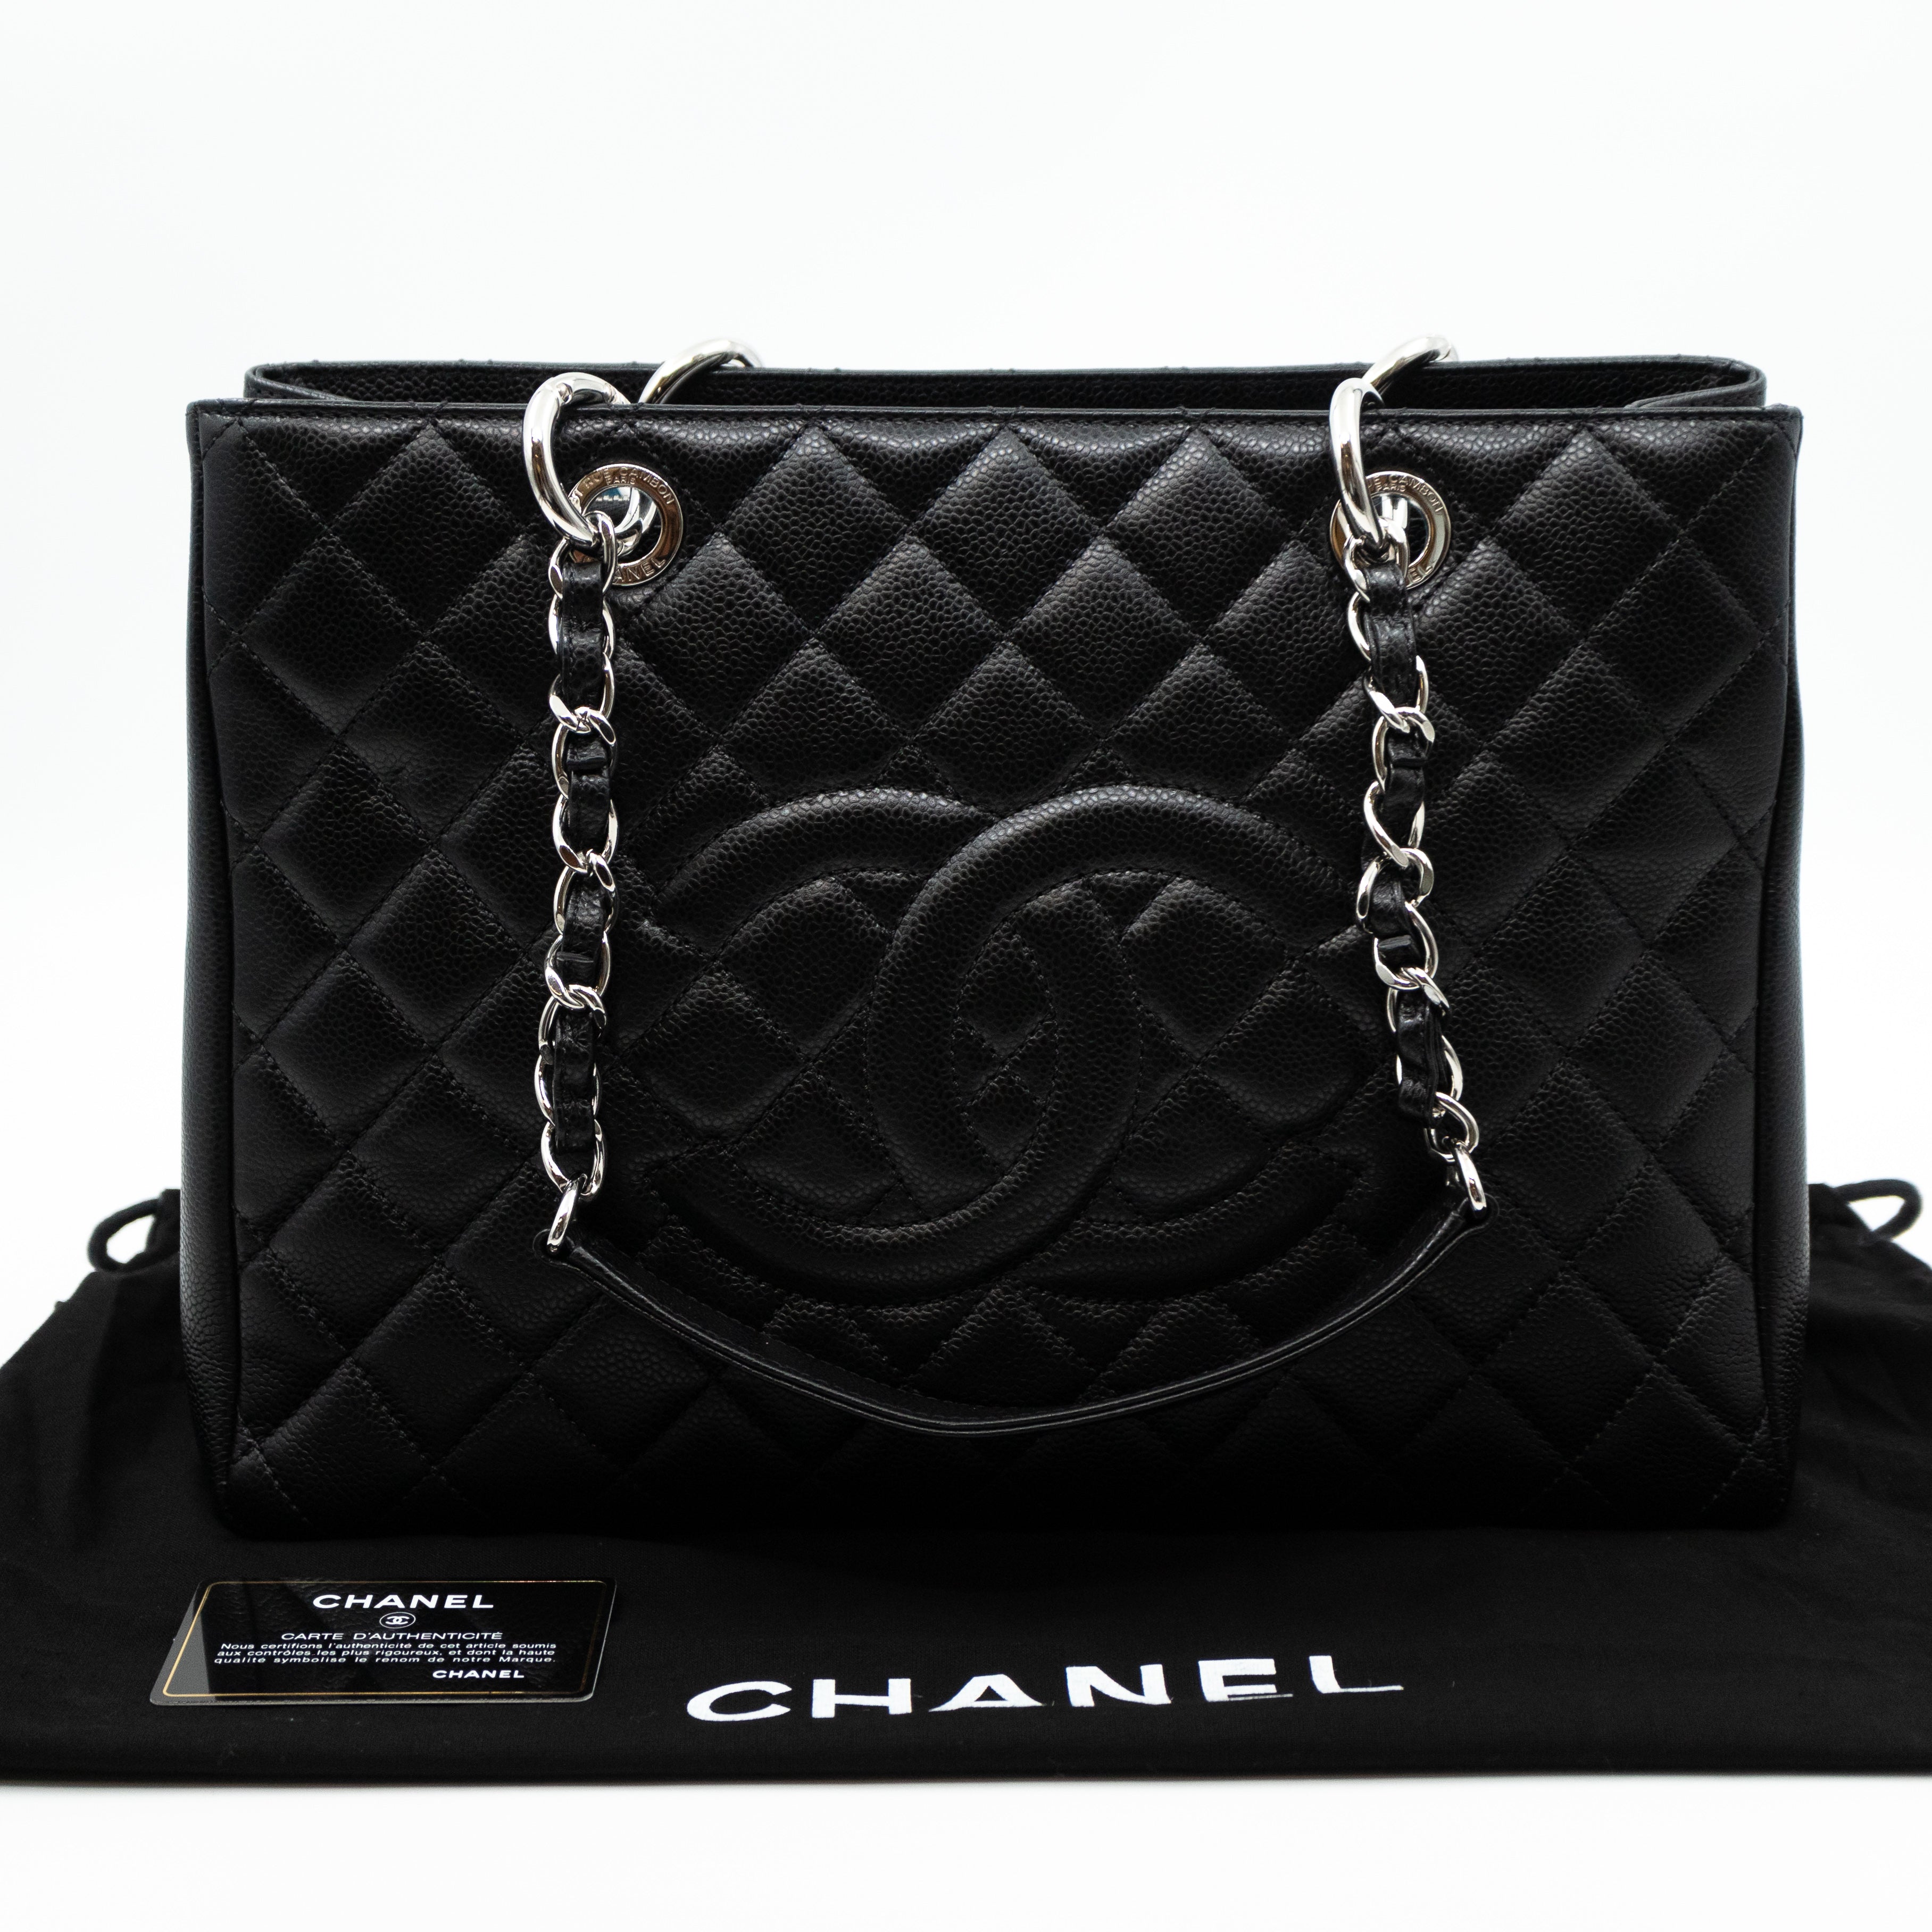 Chanel Grand Shopping Tote Black Caviar GST Fair Condition